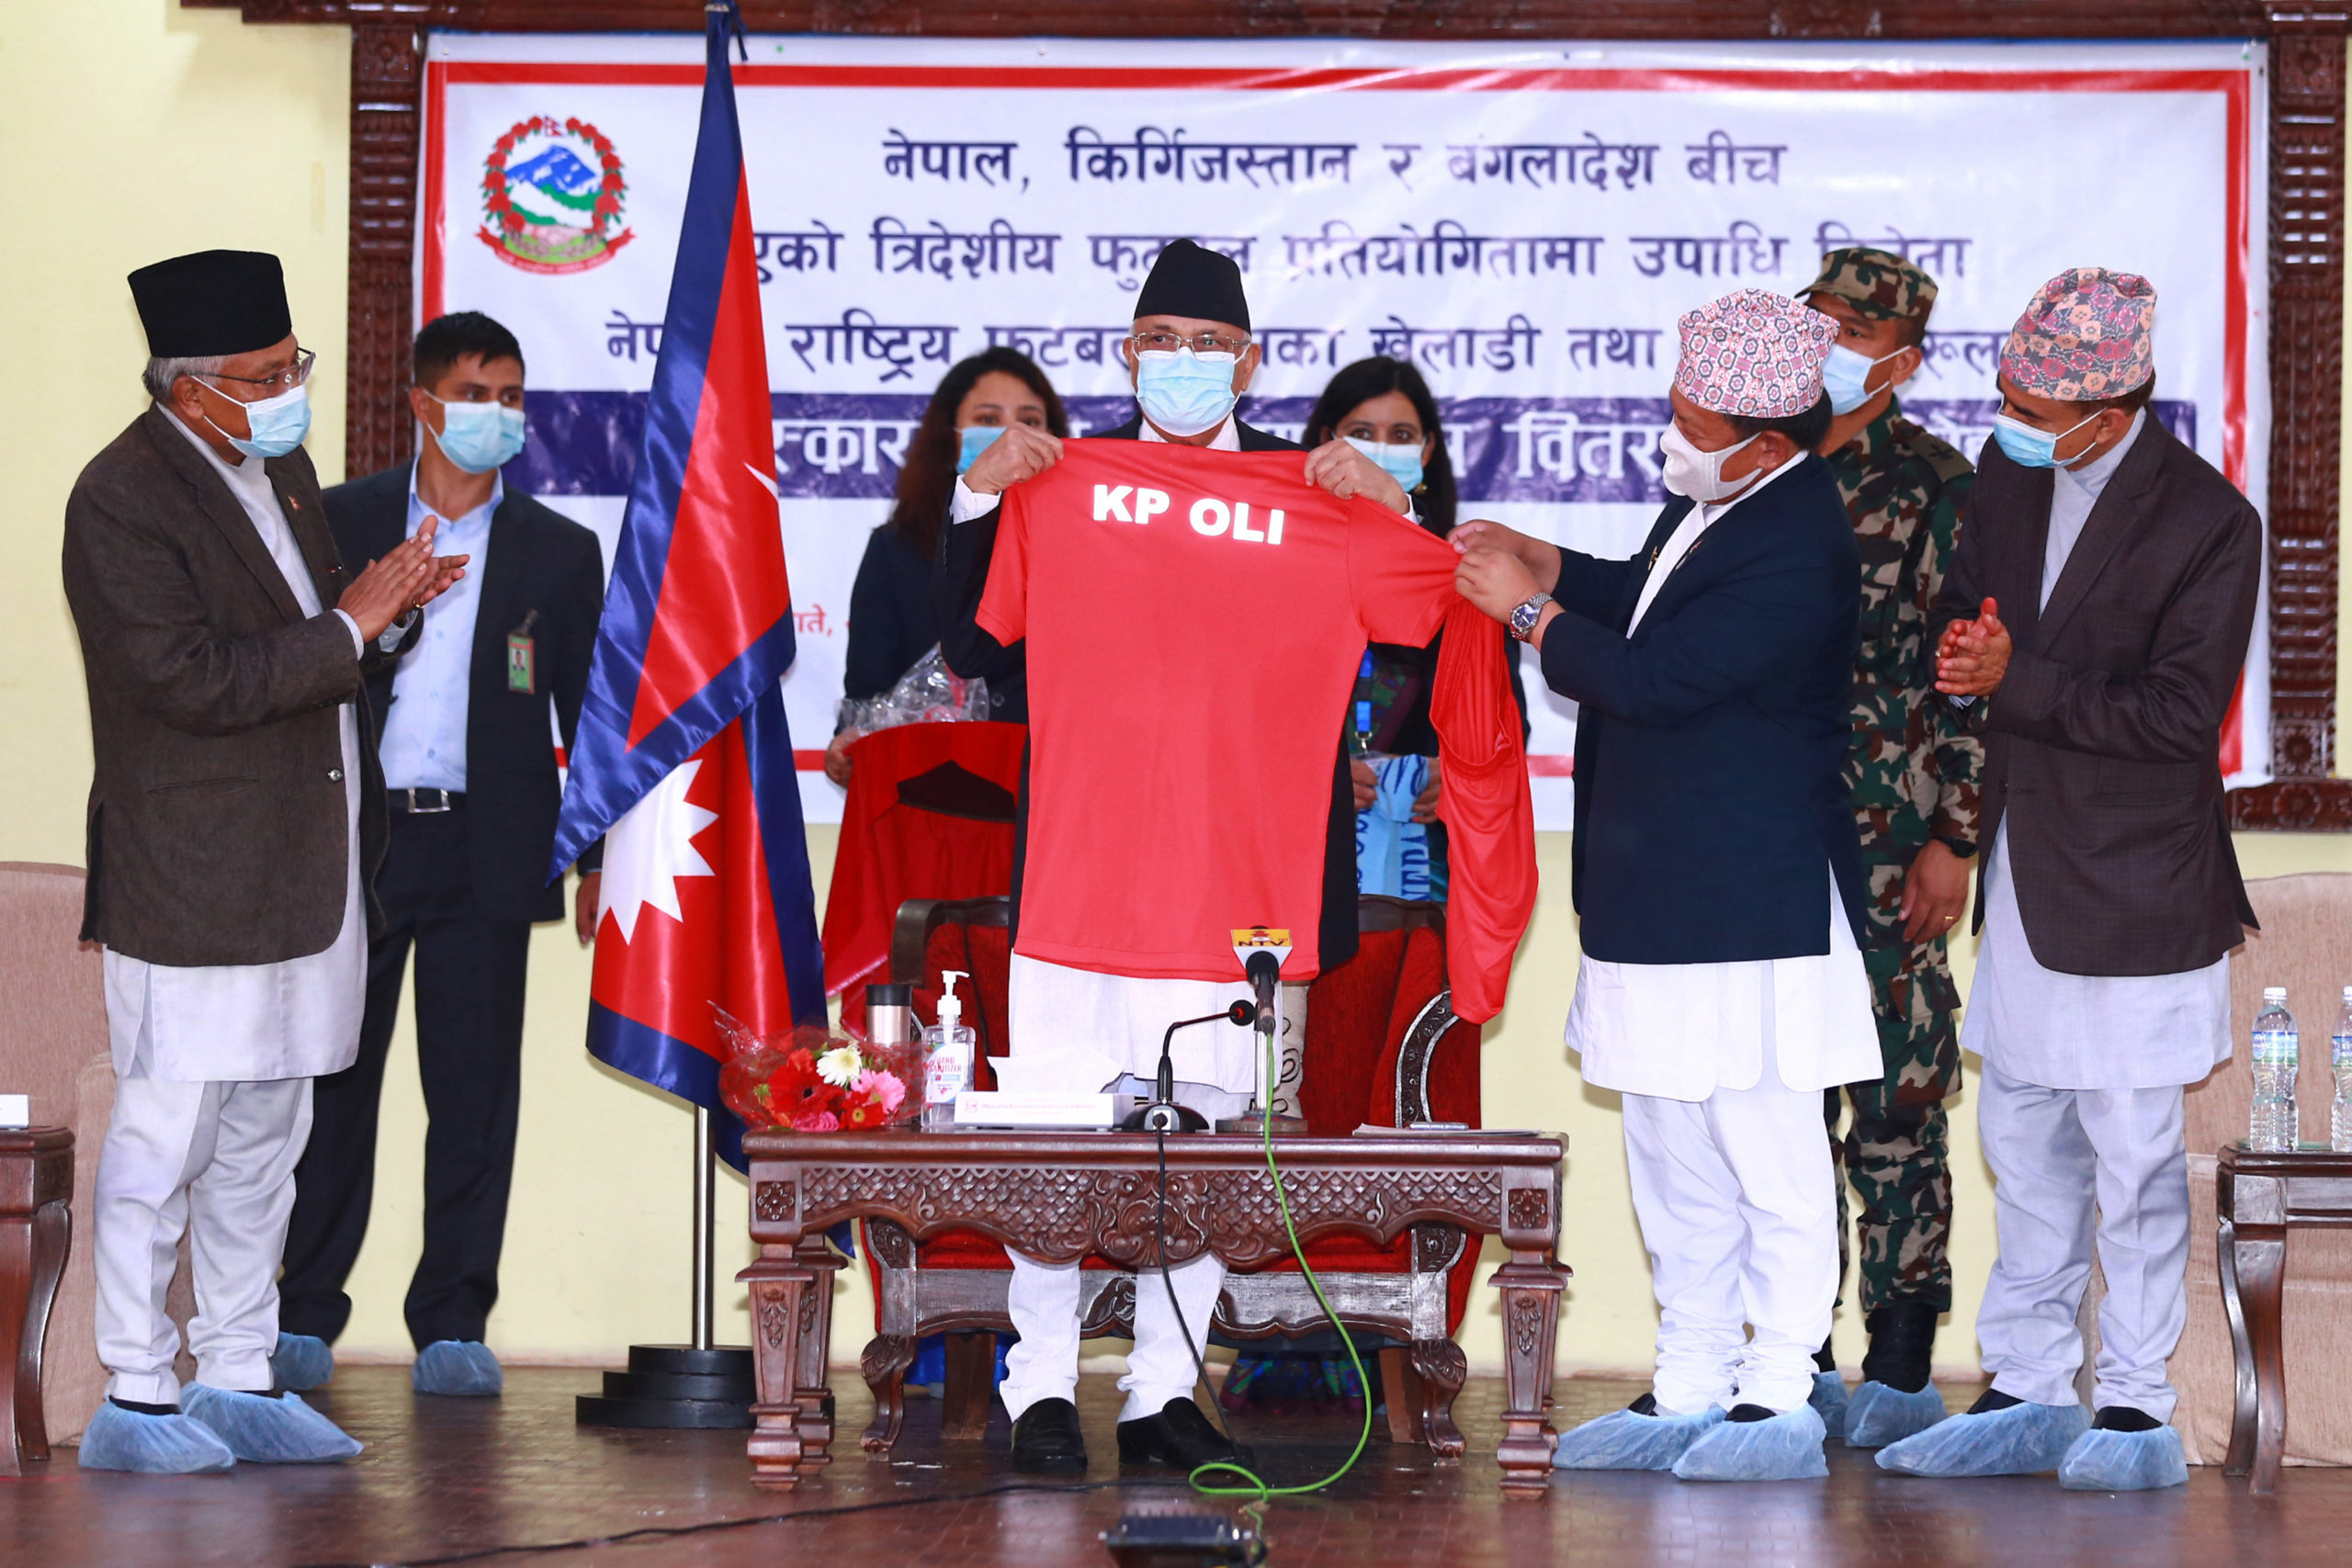 13th SAFF Championship will be held in Nepal: PM Oli